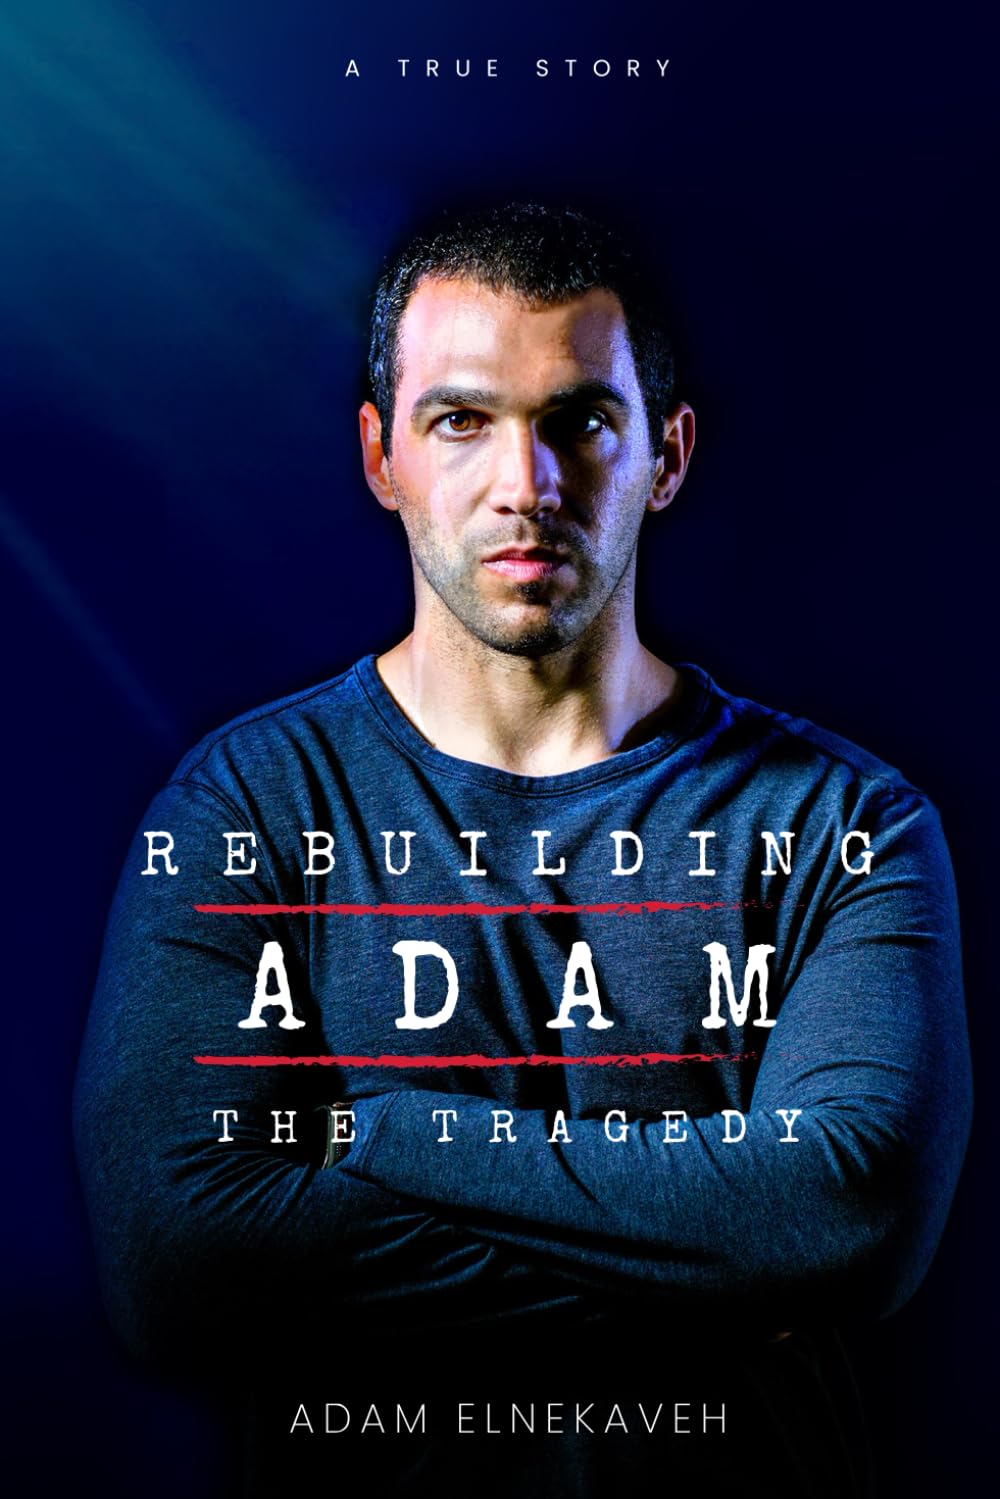 Adam Elnekaveh talks about ‘rebuilding’ his life after a tragic incident on The Zach Feldman Show